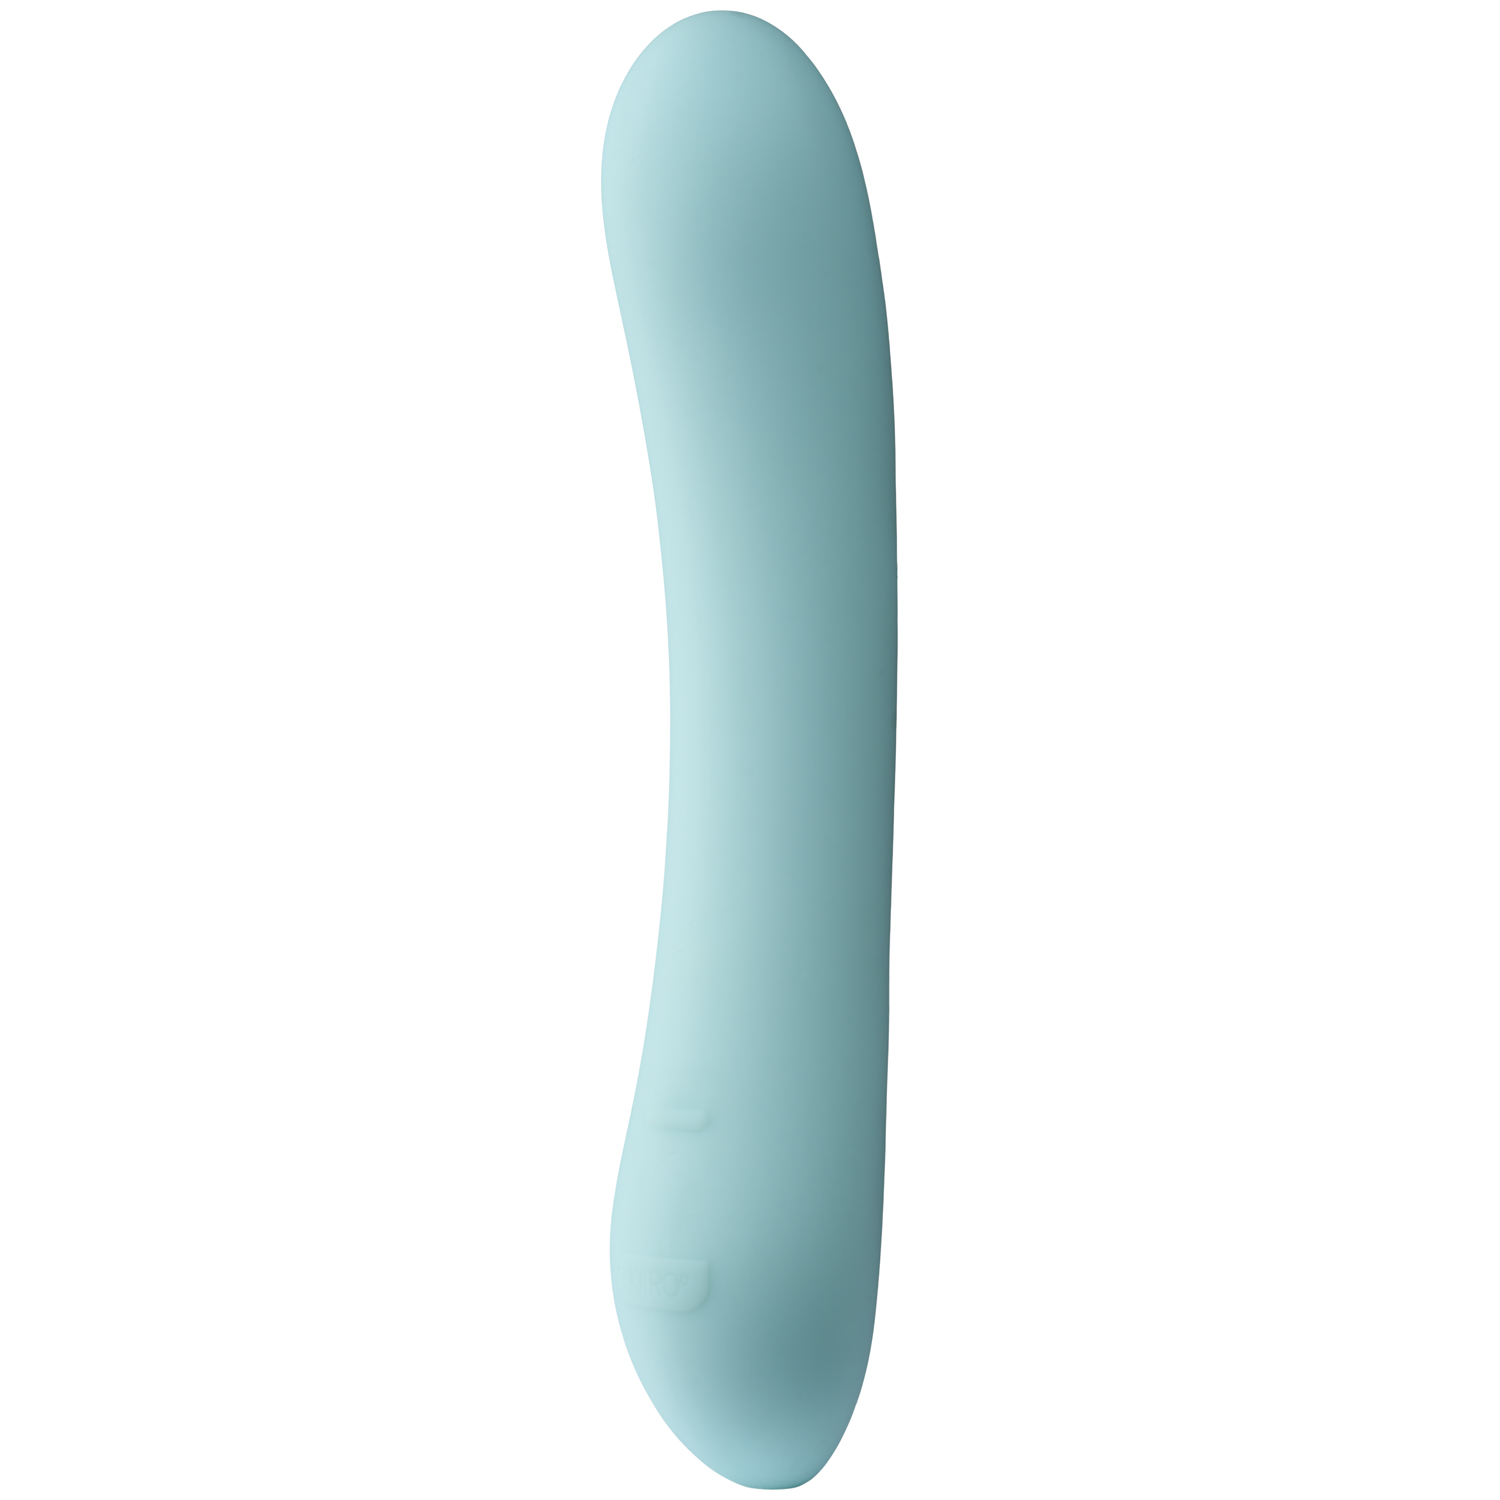 28357-kiiroo-pearl2-teledildonic-interactive-turquoise-dildo-vibrator_01_product_q100